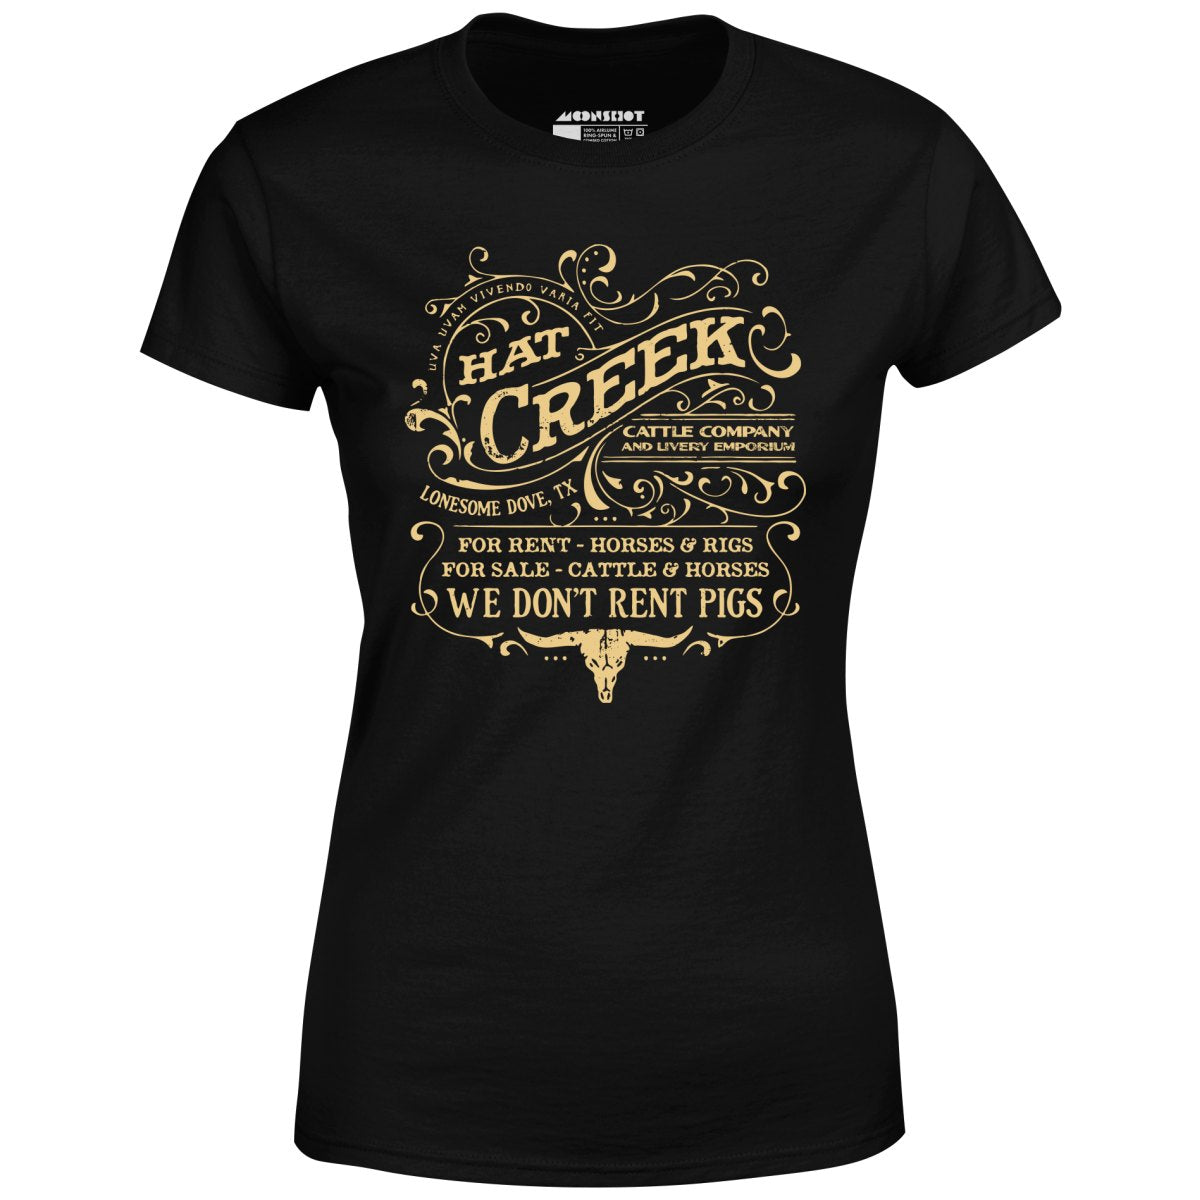 Hat Creek Cattle Company - Lonesome Dove, TX - Women's T-Shirt